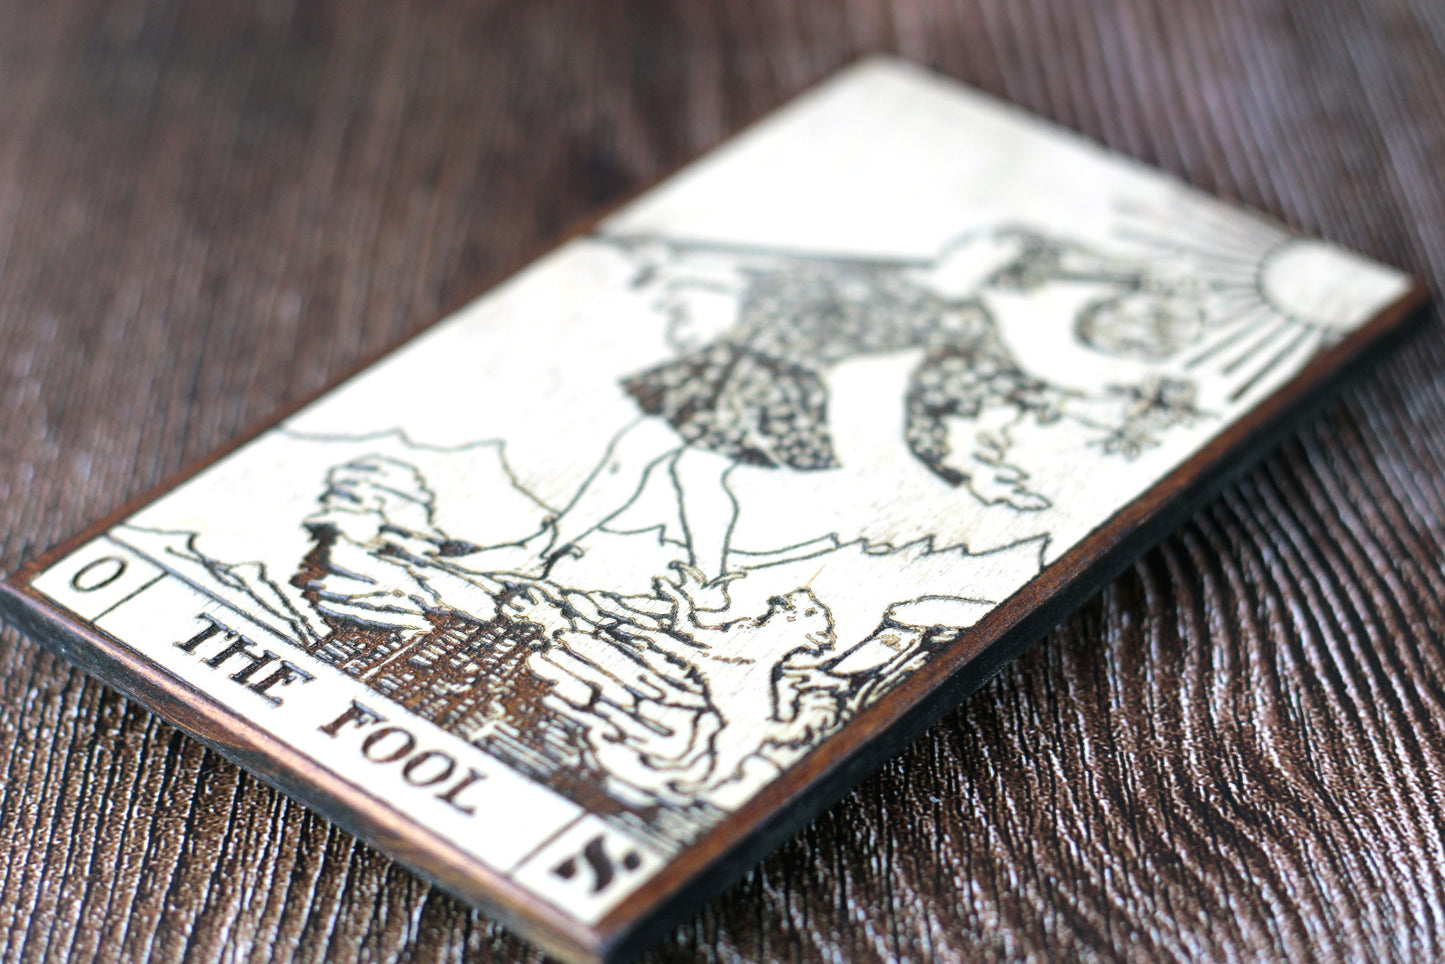 Wooden Tarot card jewelry box with The Fool card design. A handmade keepsake box for trinkets or jewellery.